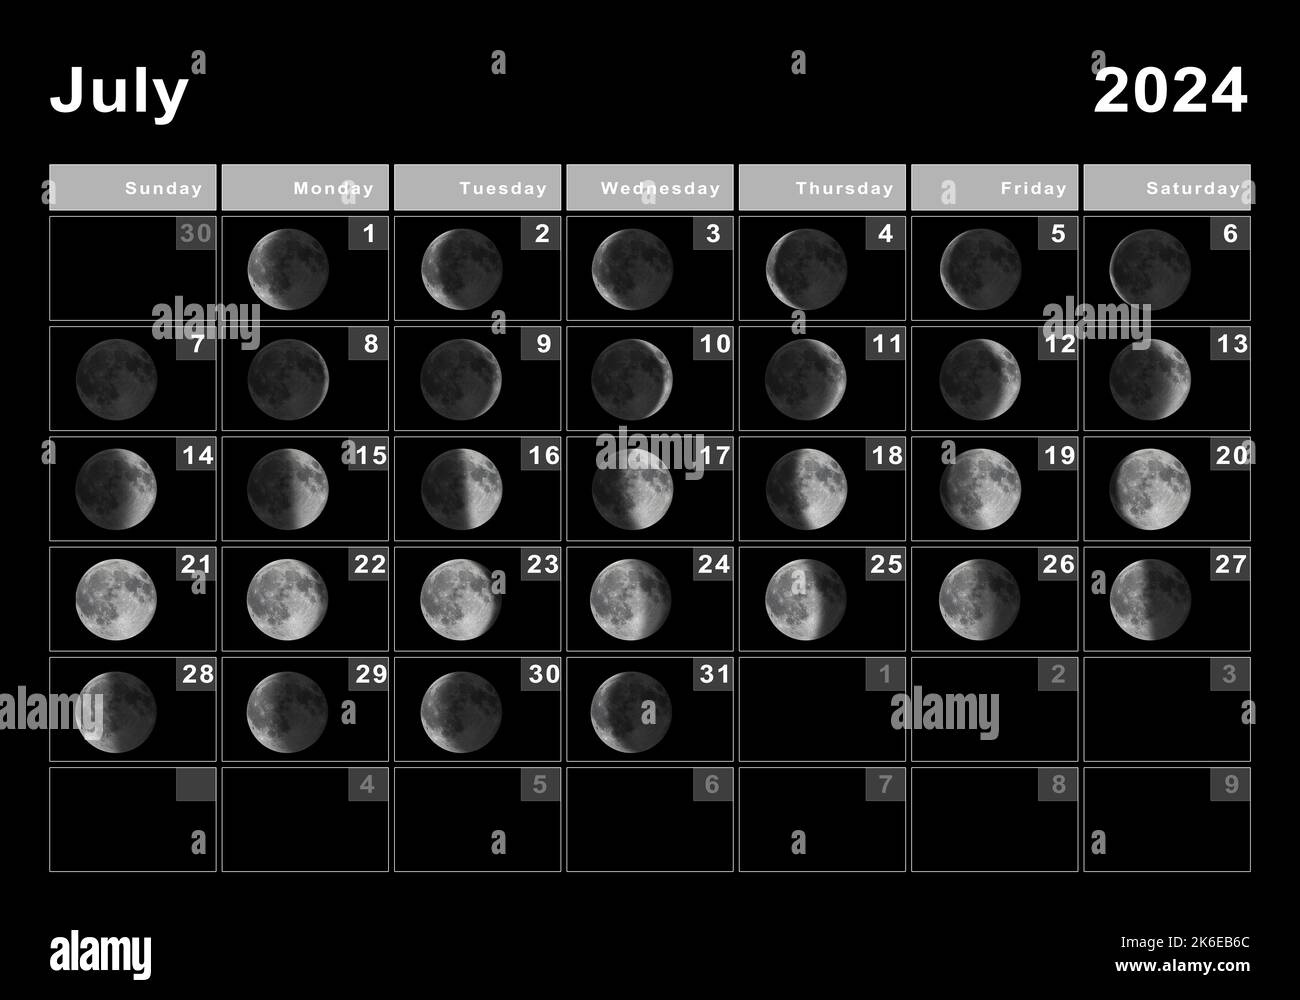 July 2024 Lunar Calendar, Moon Cycles, Moon Phases Stock Photo - Alamy in July 1 Lunar Calendar 2024